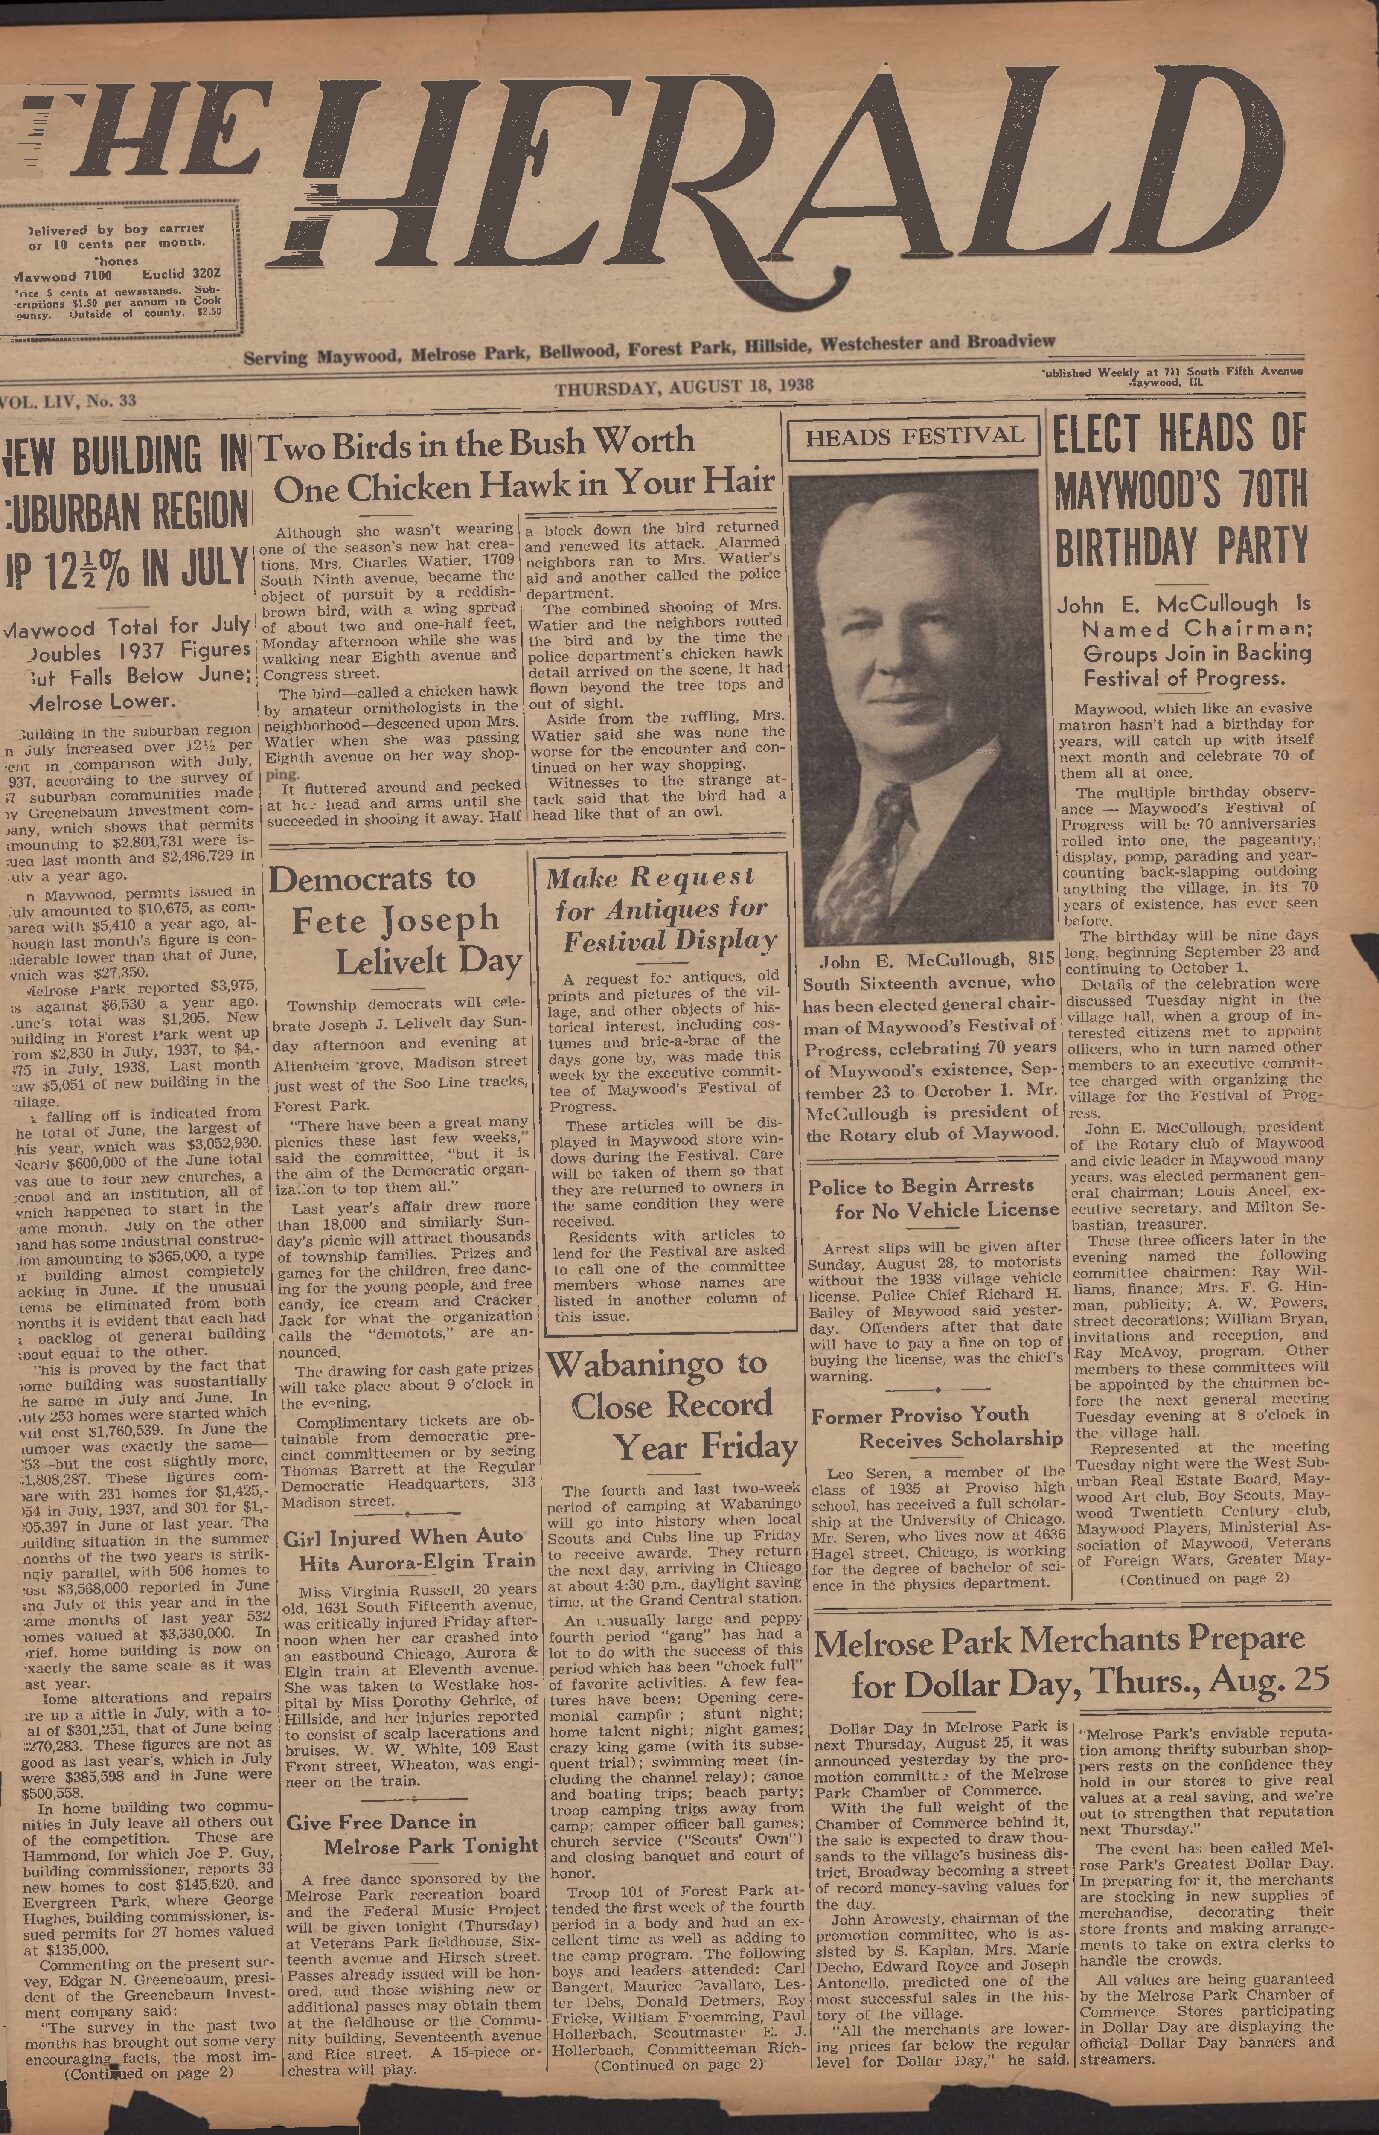 The Herald – 19380818